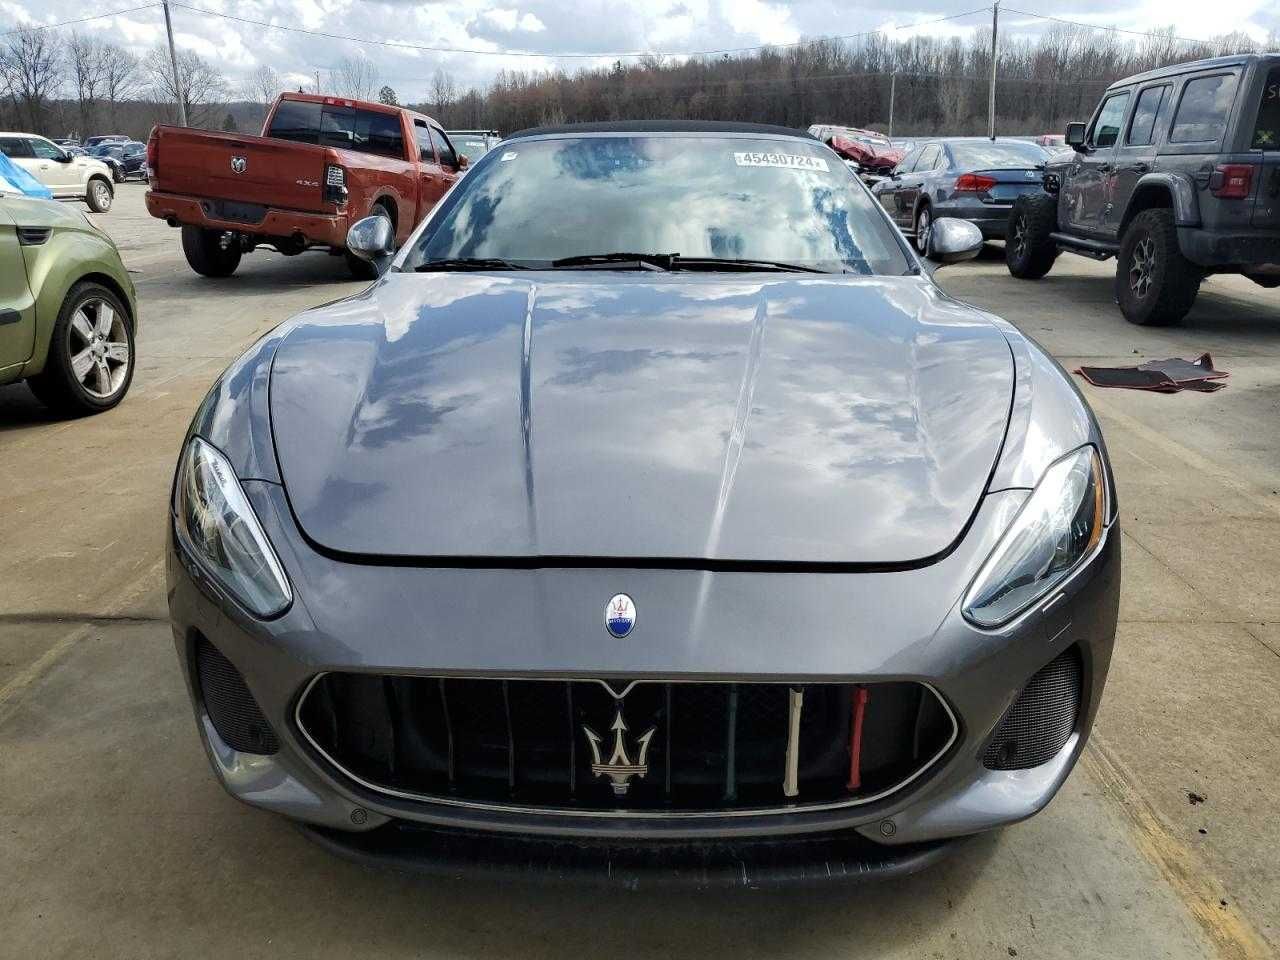 2019 Maserati Granturismo S